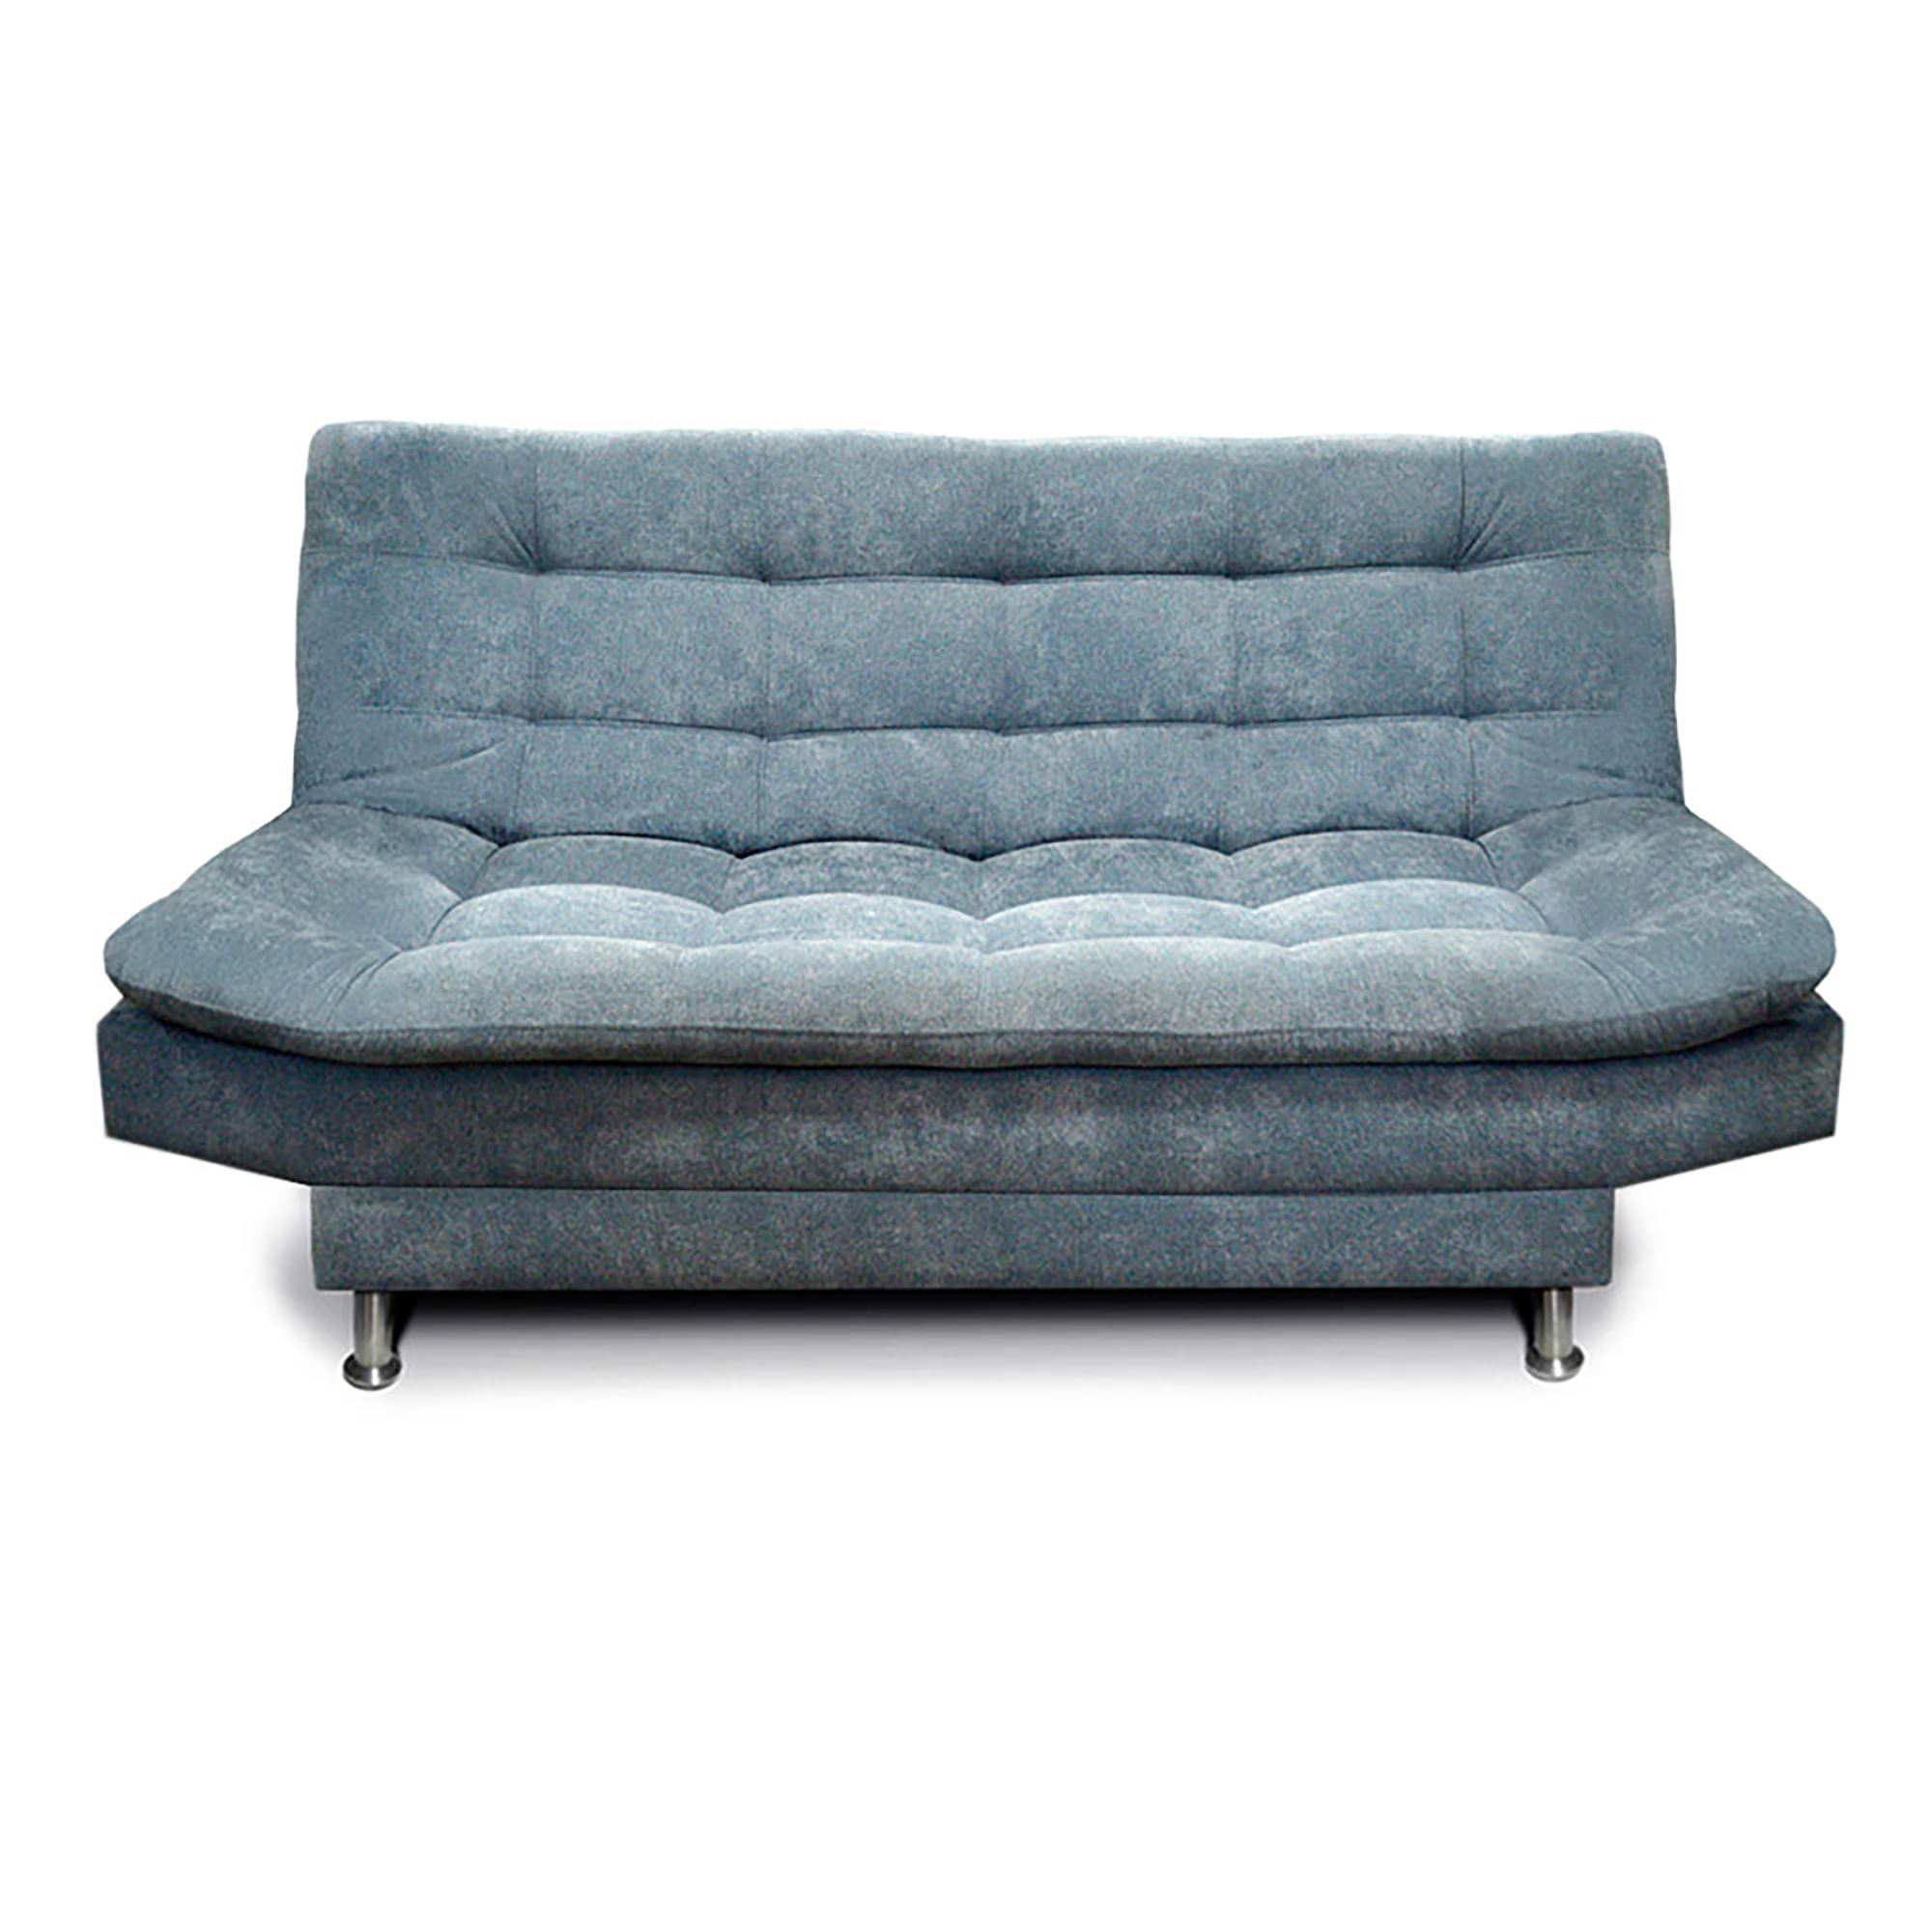 Sofa Cama Imperial Color Azul